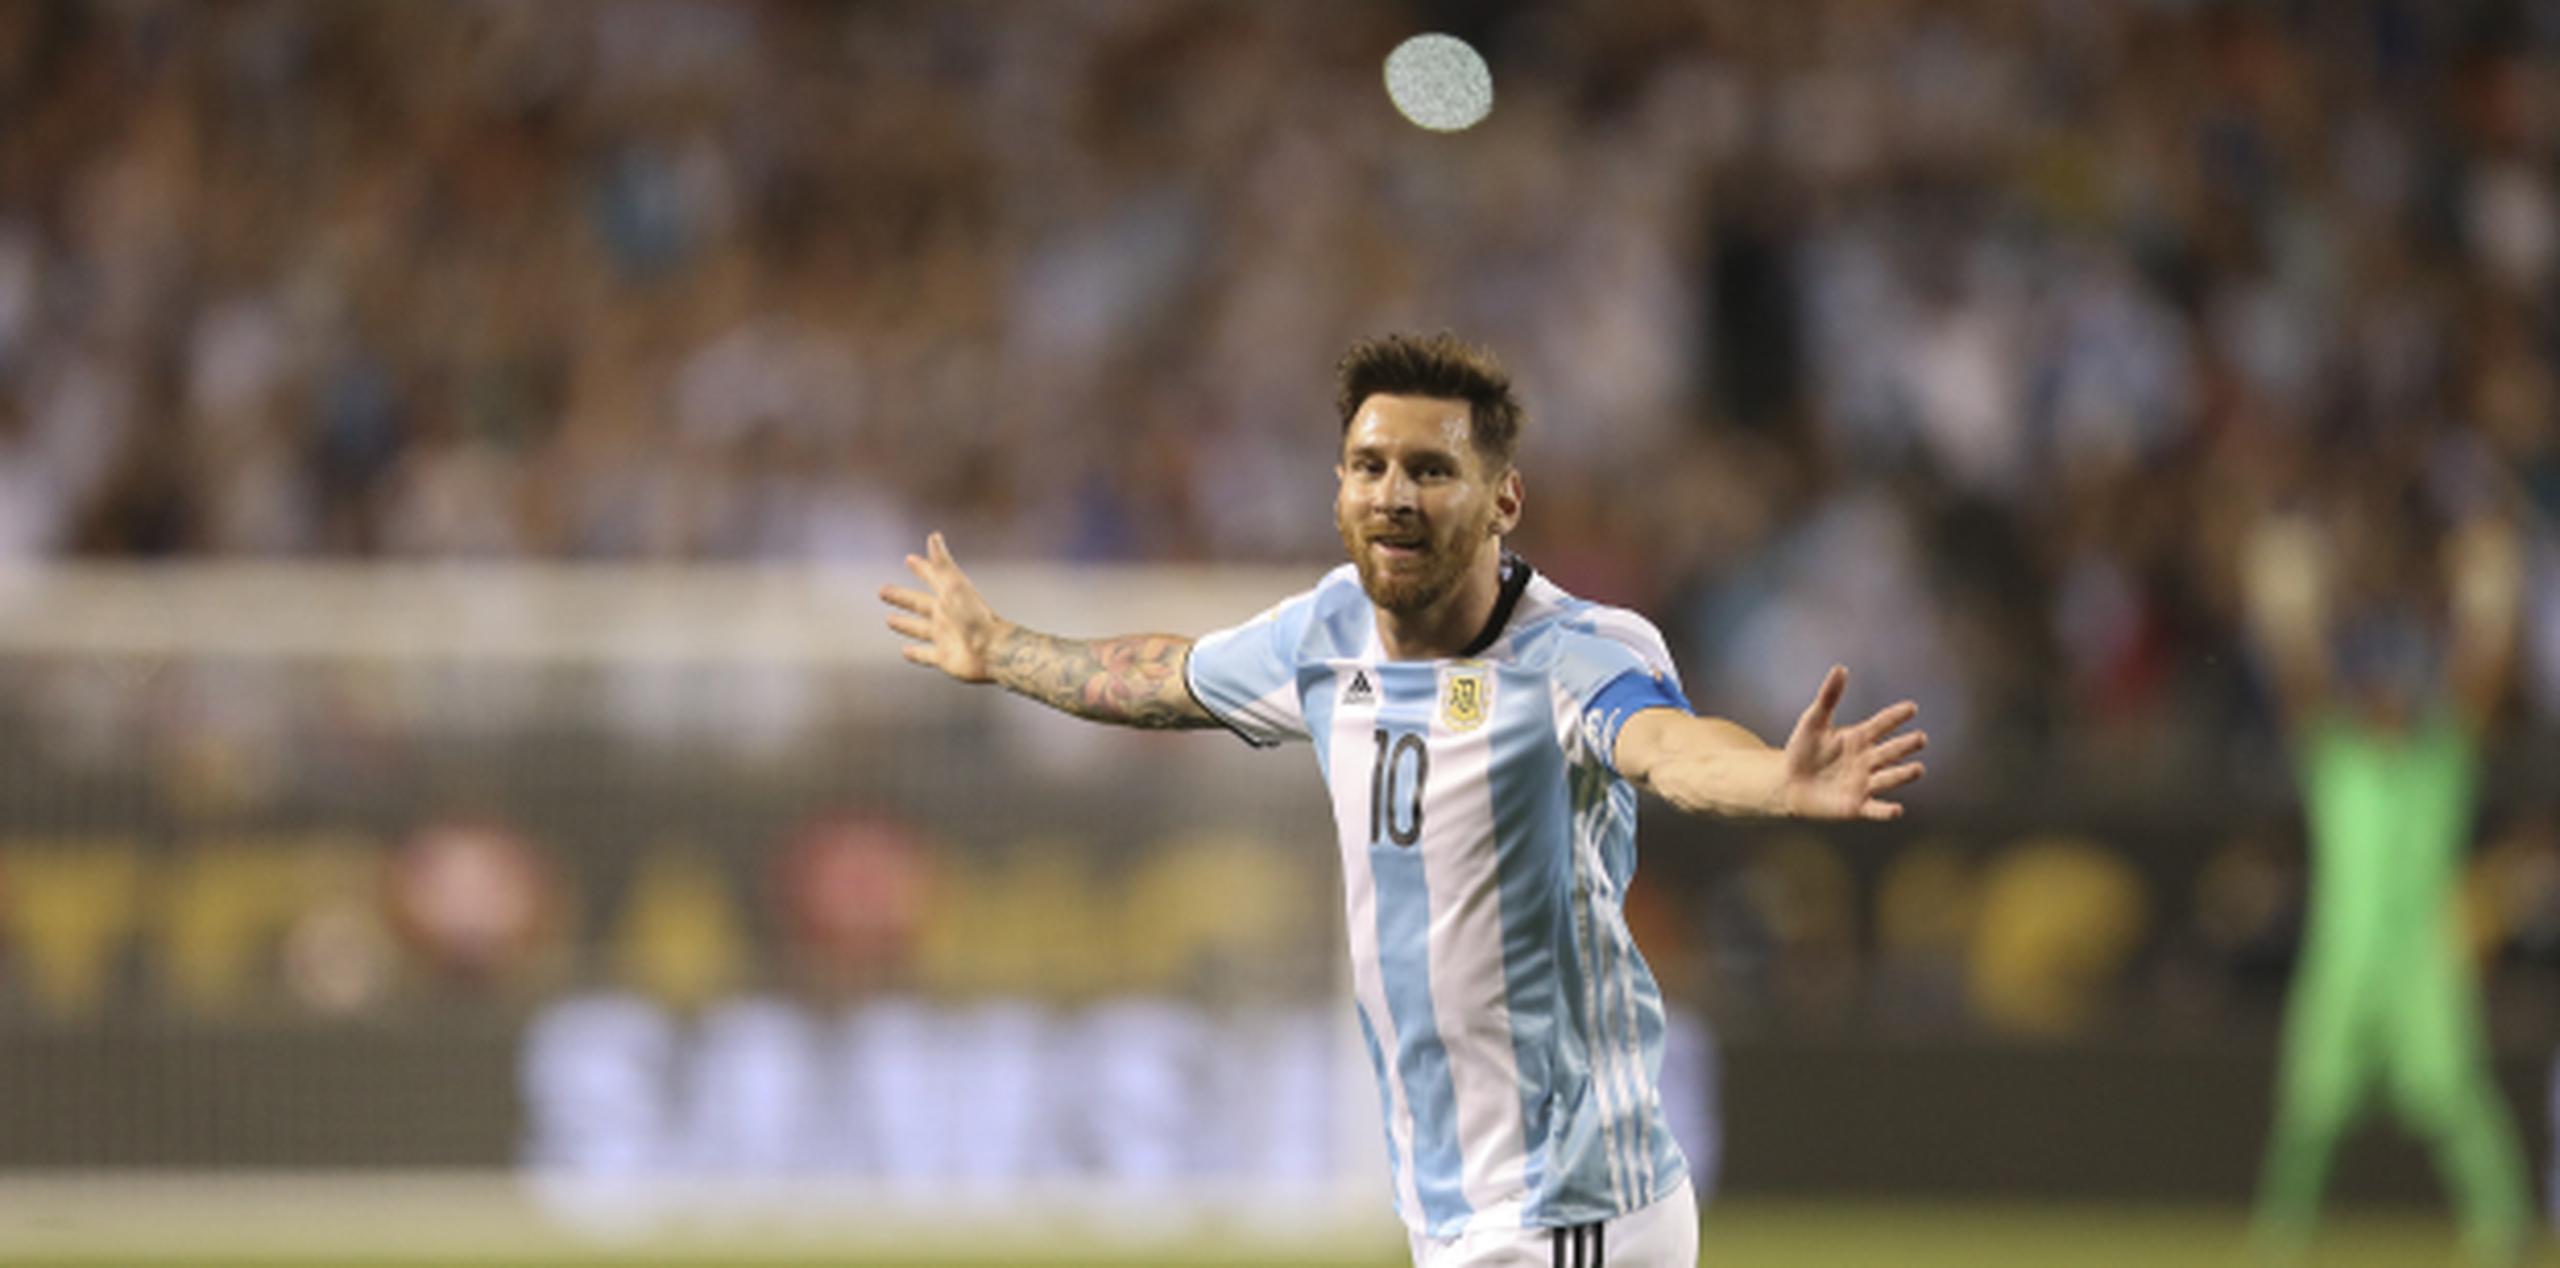 Messi celebra uno de sus goles. (Prensa Asociada)